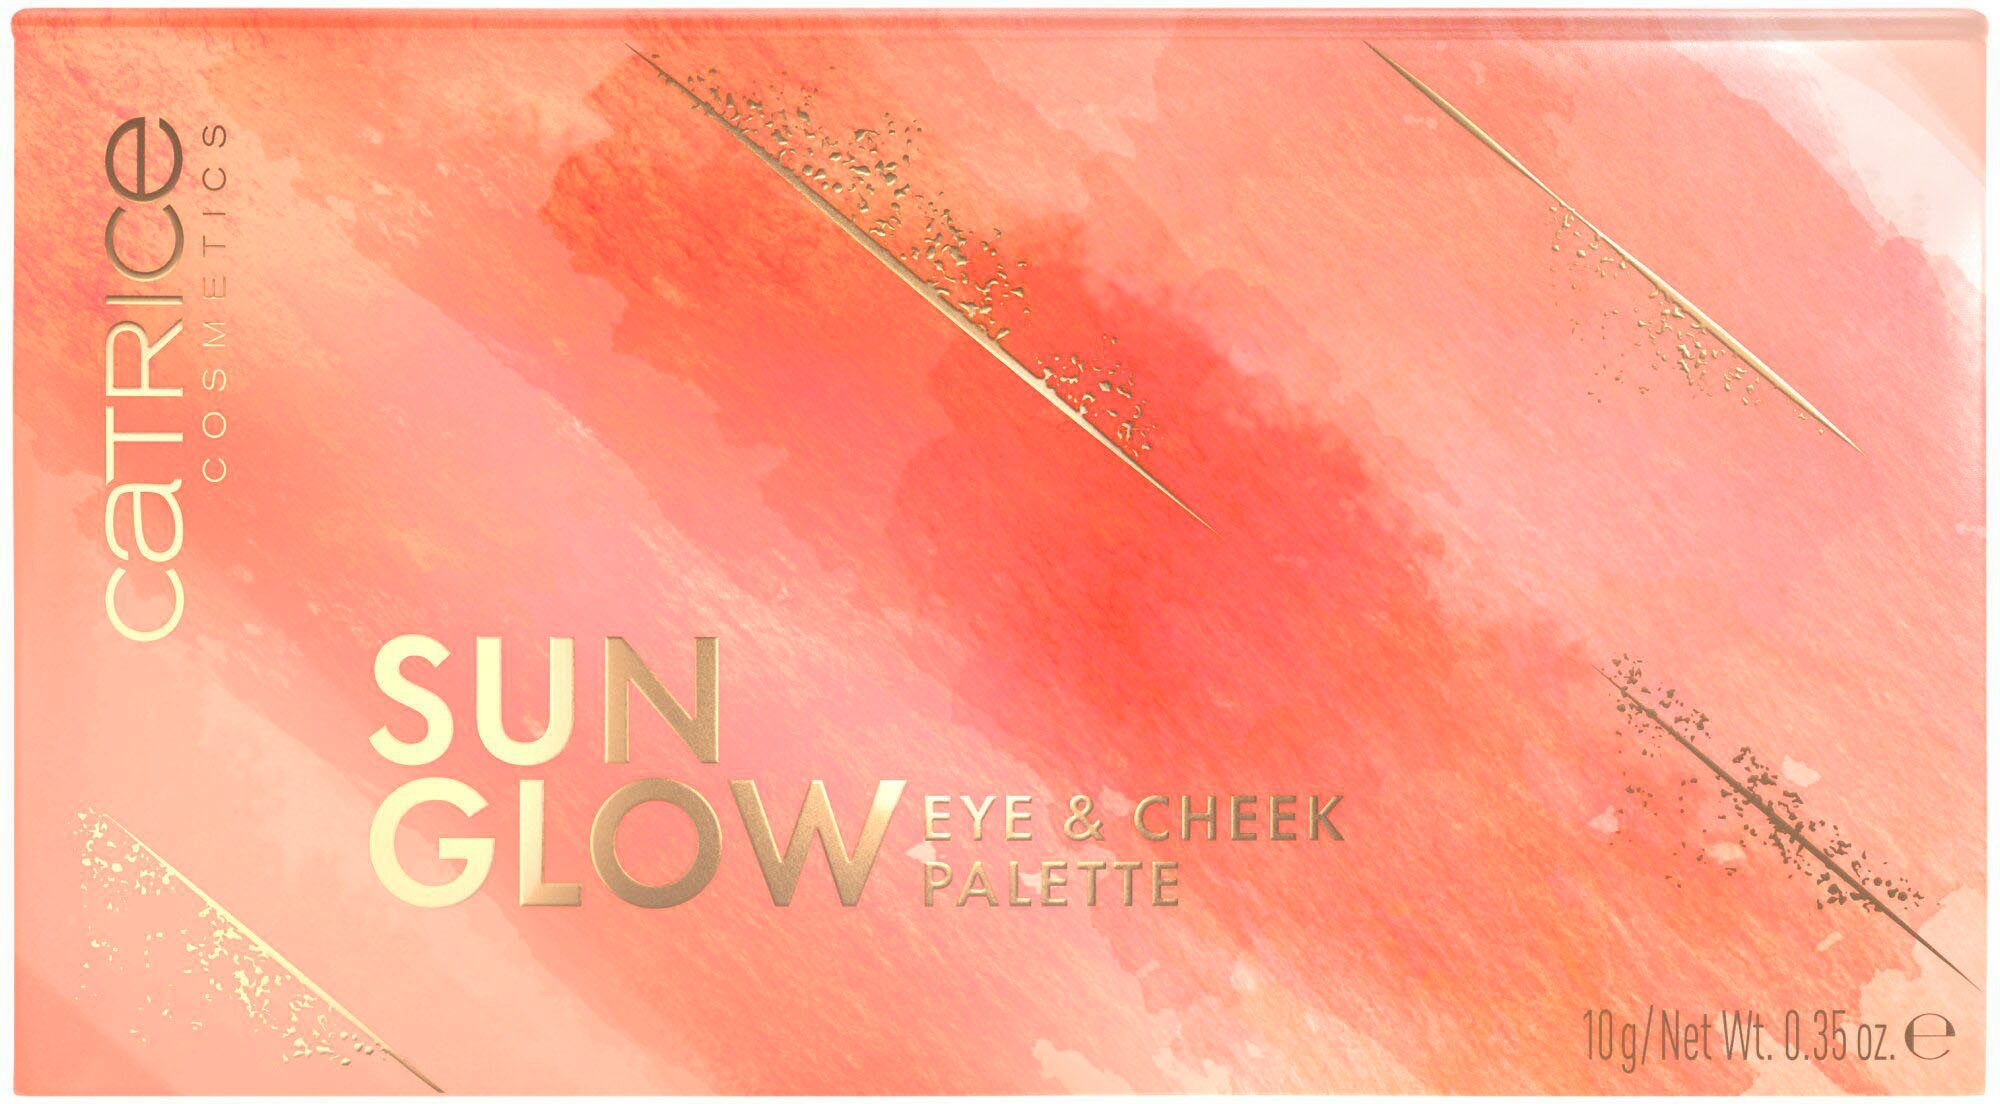 & Cheek Palette Rouge-Palette Catrice Eye